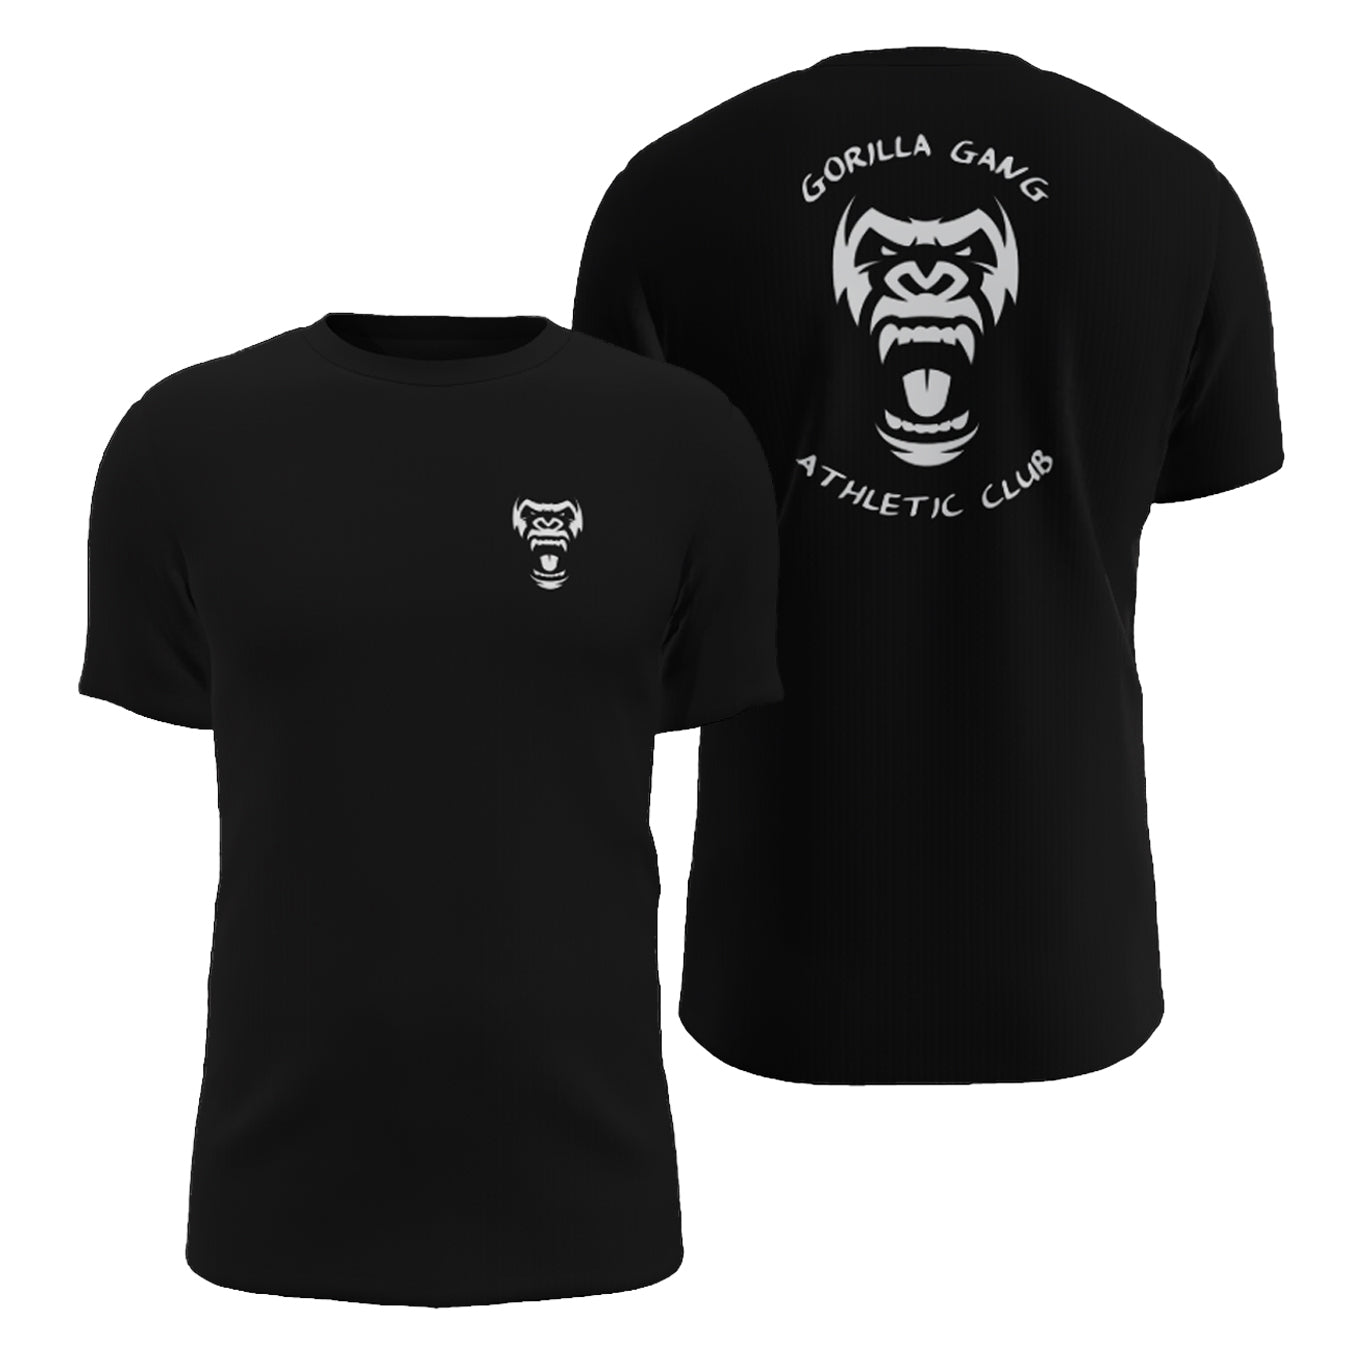 Gorilla Gang Athletic Club T-Shirt